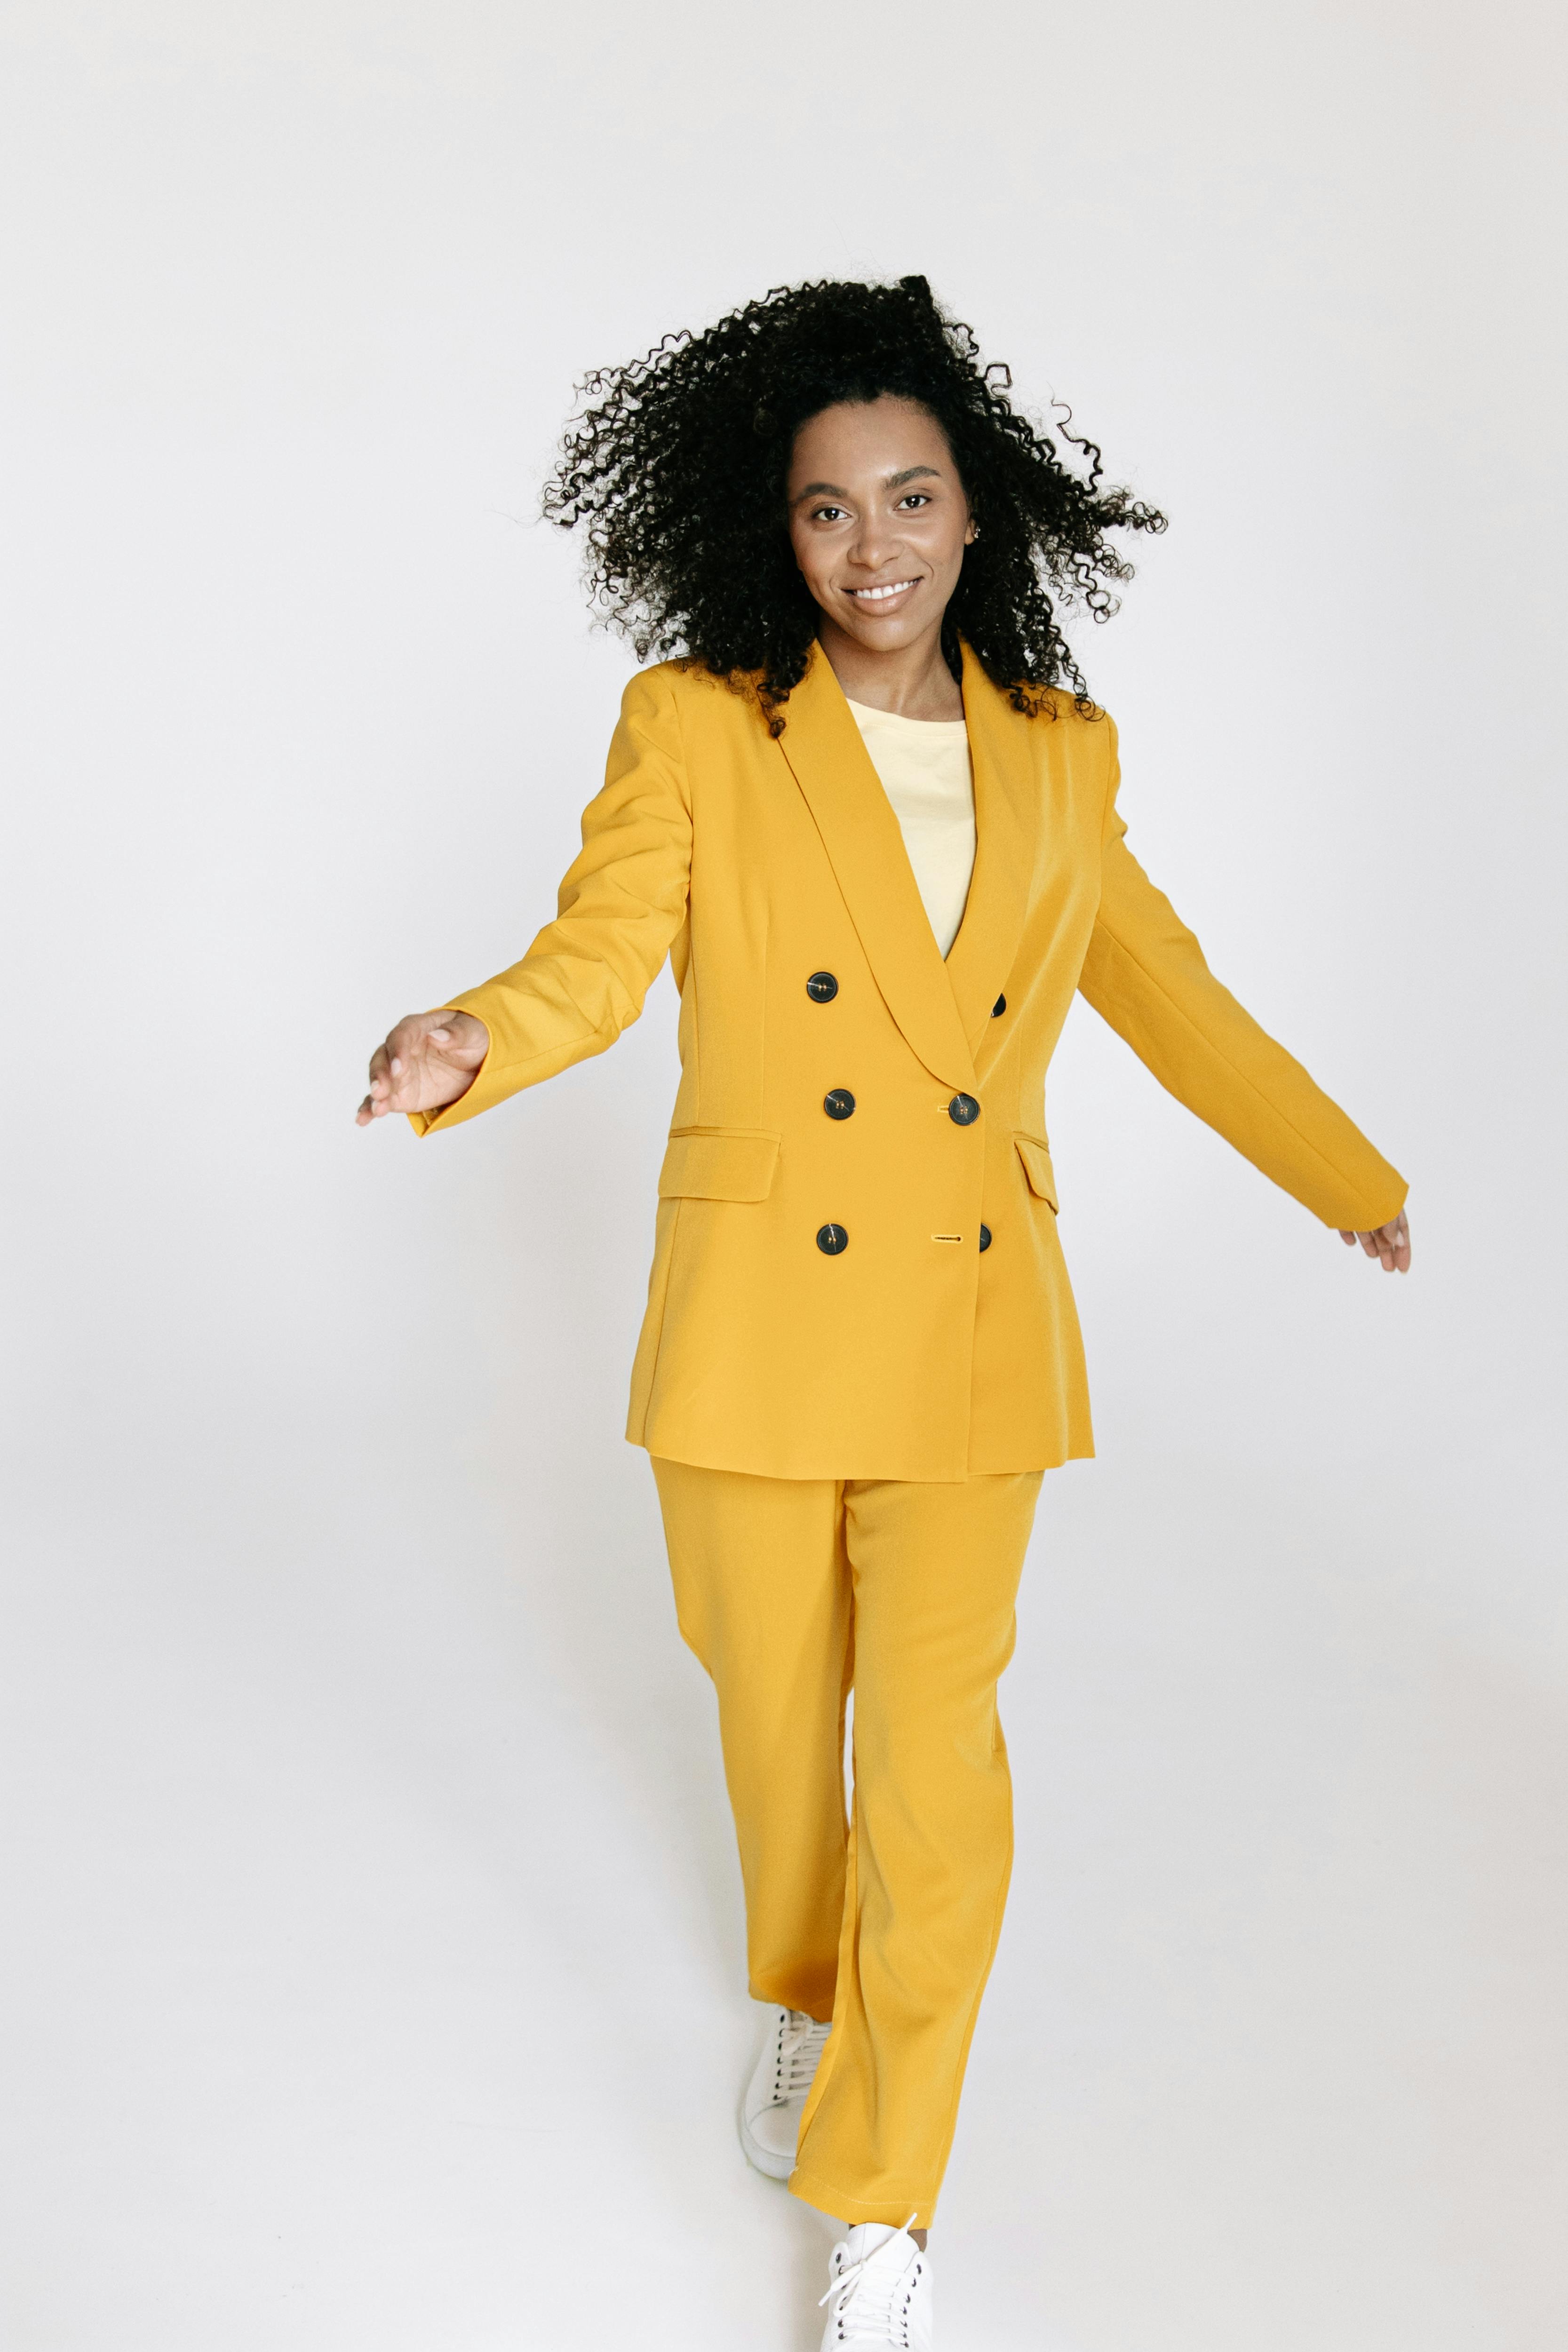 Beautiful Pretty Girl Wear Yellow Suit Jacket and Pants Ski Stock Image -  Image of businesswoman, ladylike: 108641509